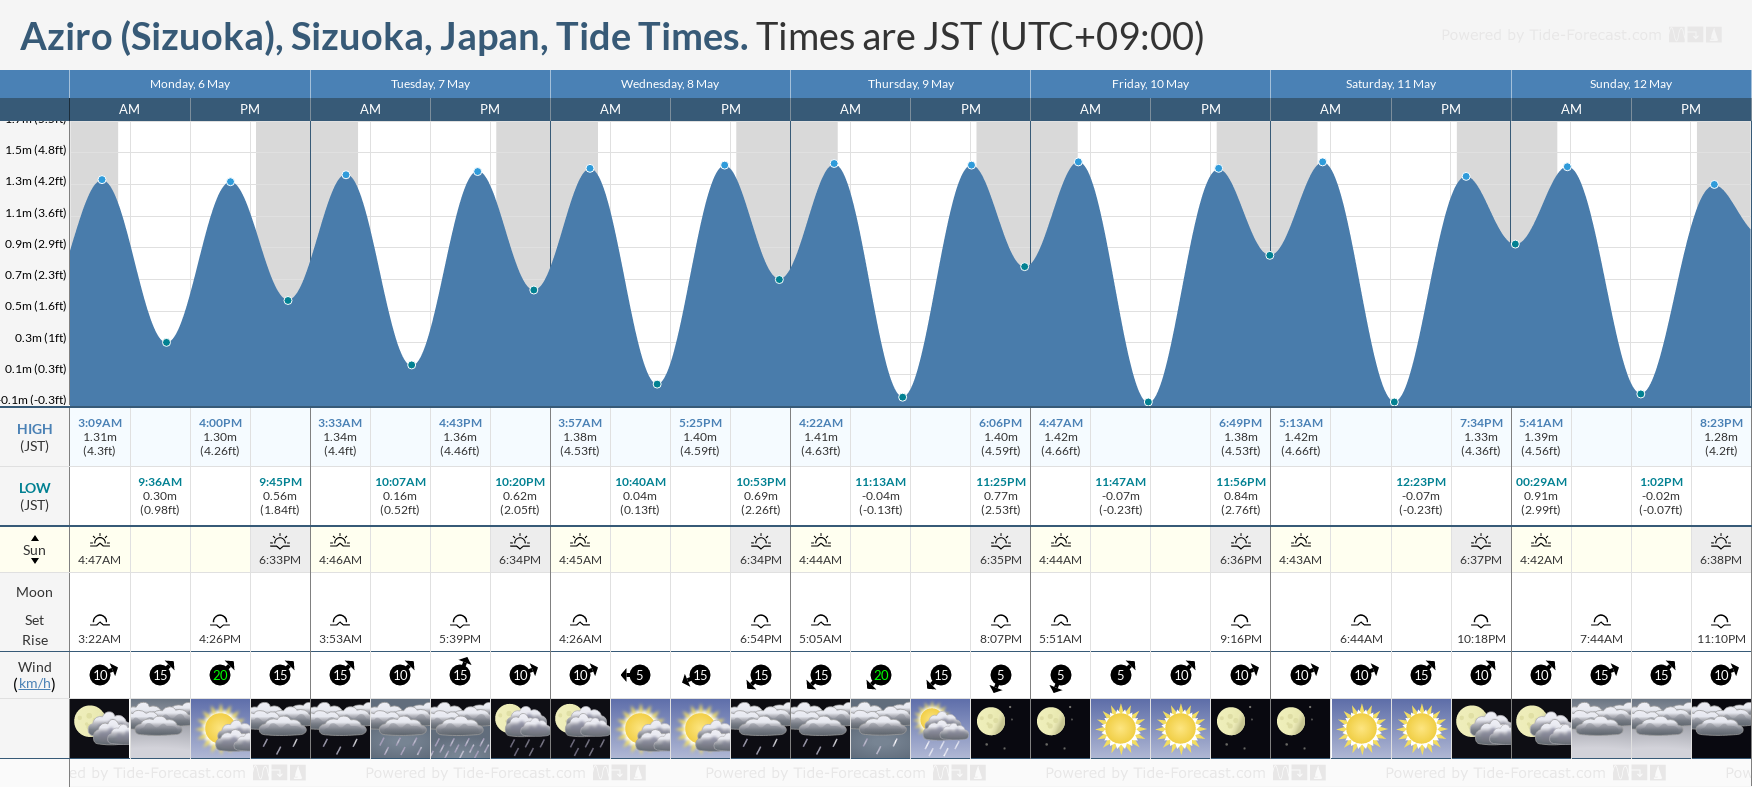 Aziro (Sizuoka), Sizuoka, Japan Tide Chart including high and low tide tide times for the next 7 days